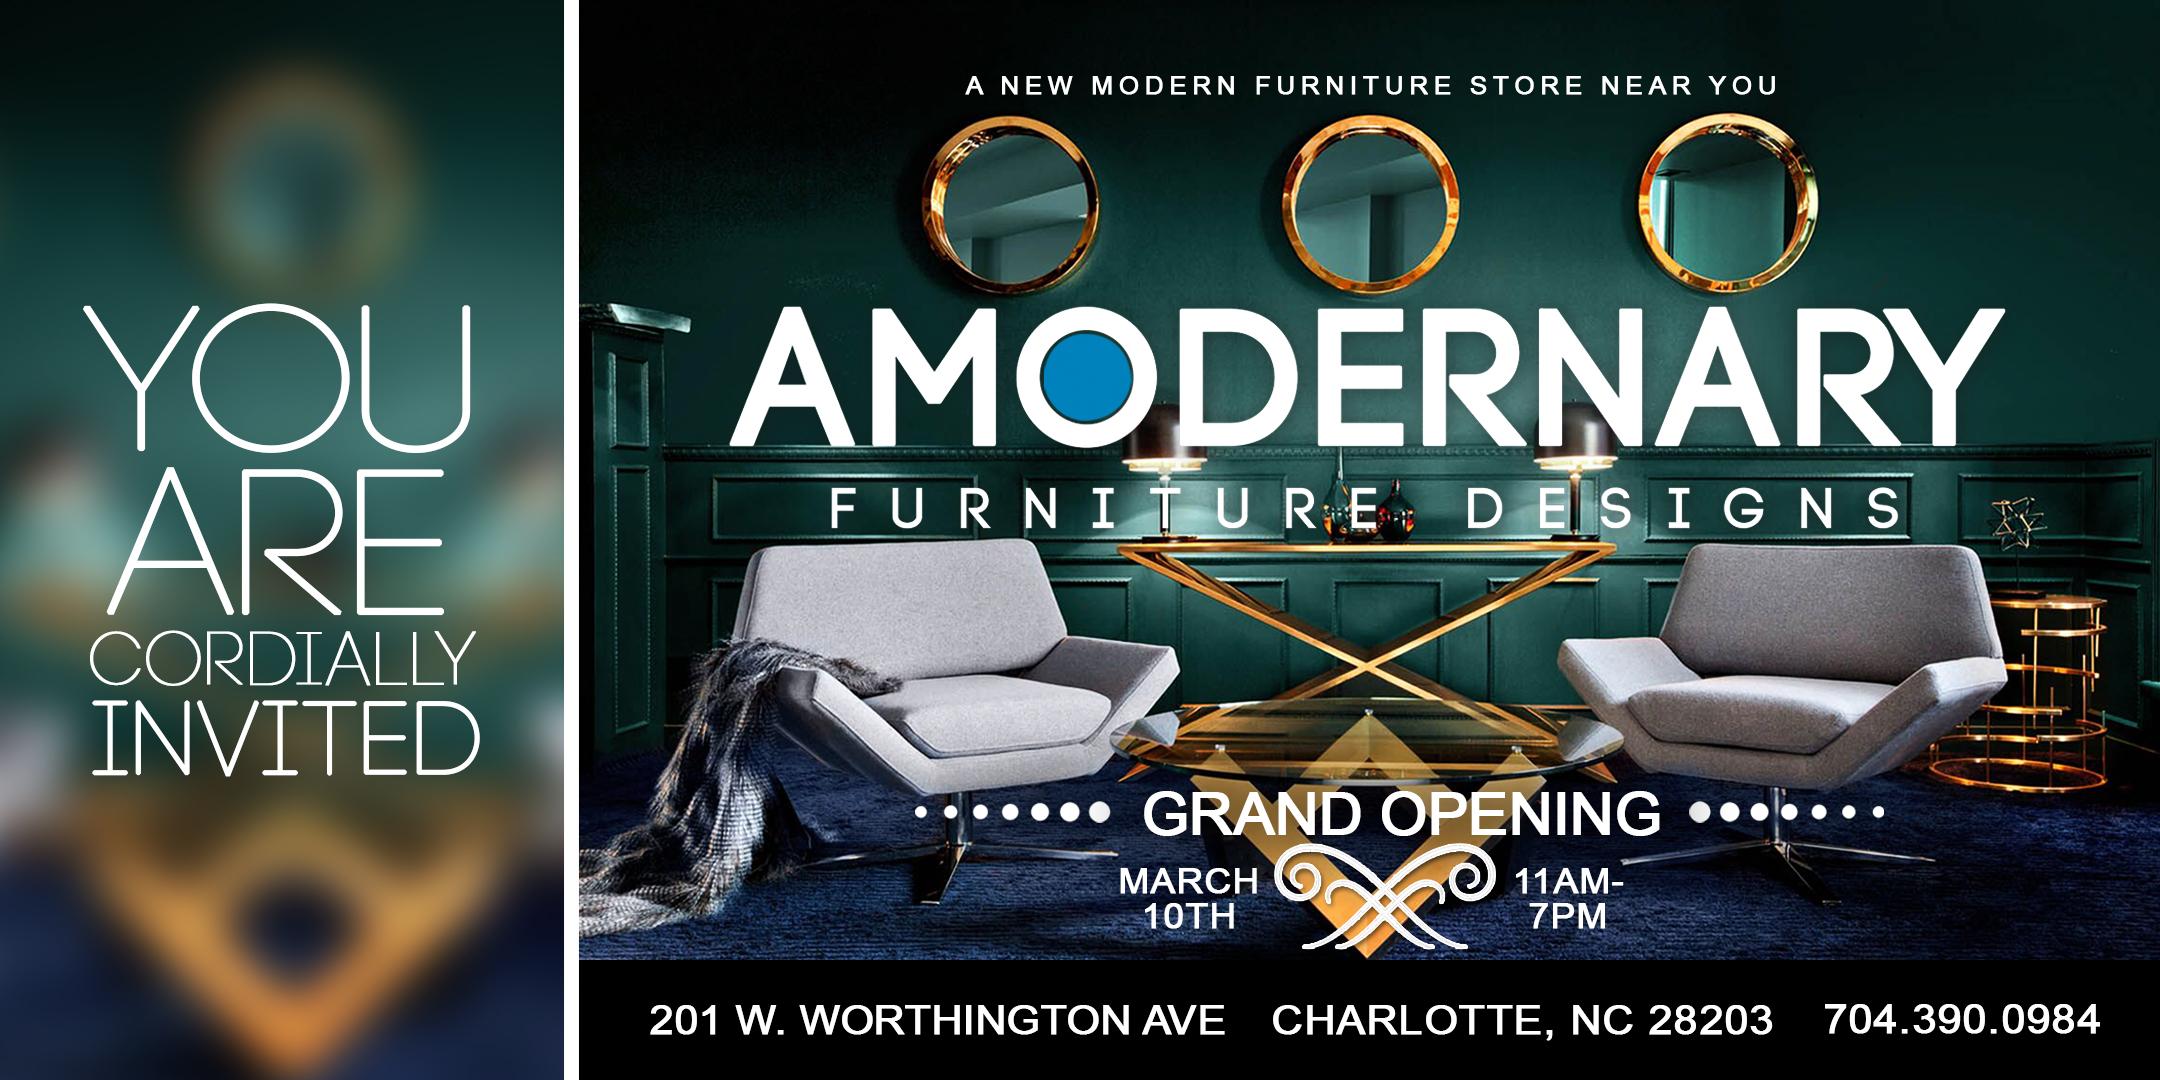 Grand Opening Amodernary Furniture Designs New Modern